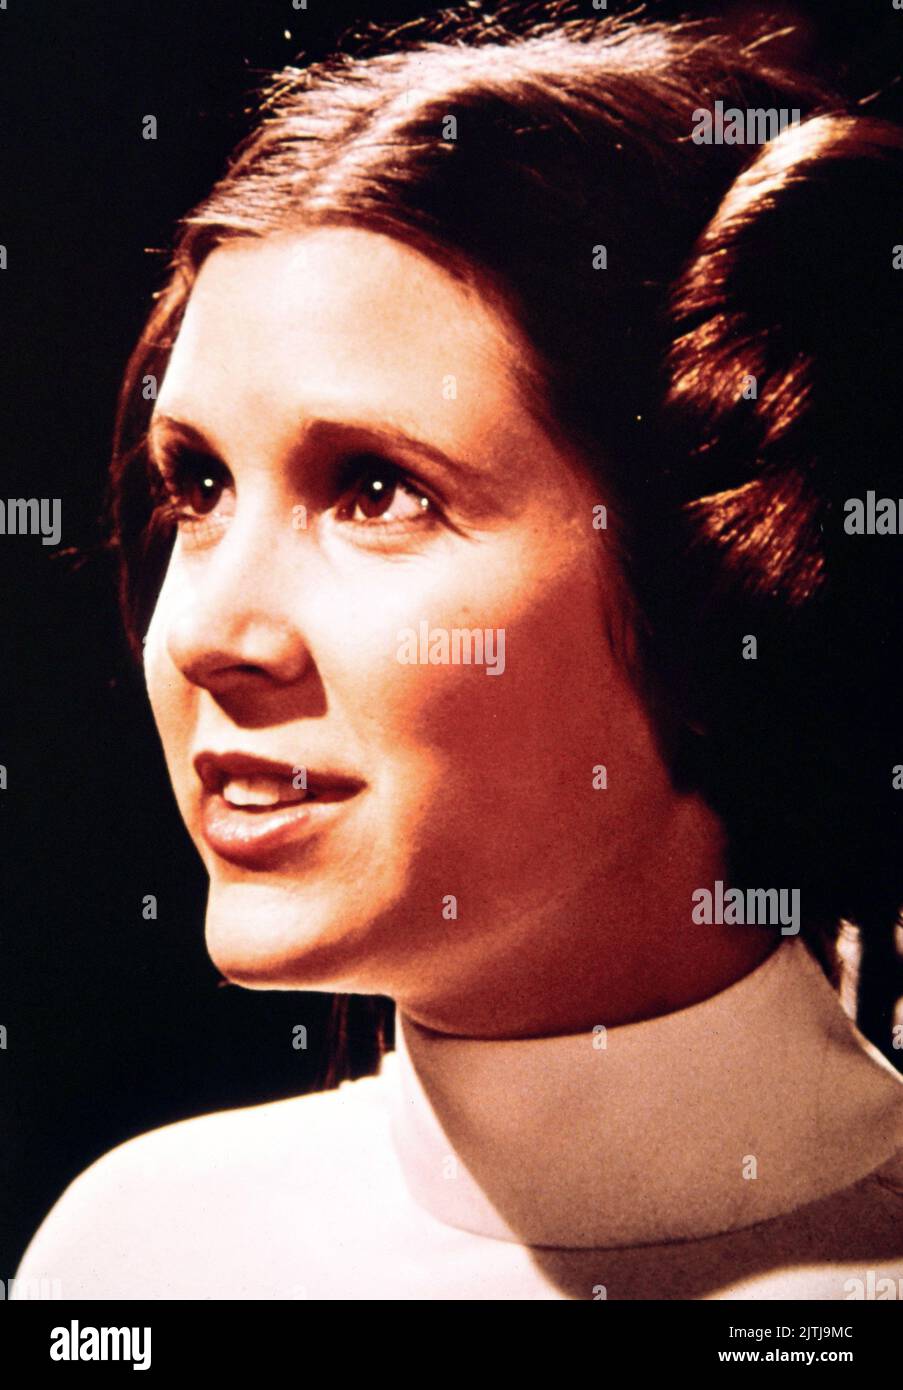 Star Wars, aka Krieg der Sterne, USA 1977, Regie: George Lucas, Darsteller: Carrie Fisher Stock Photo